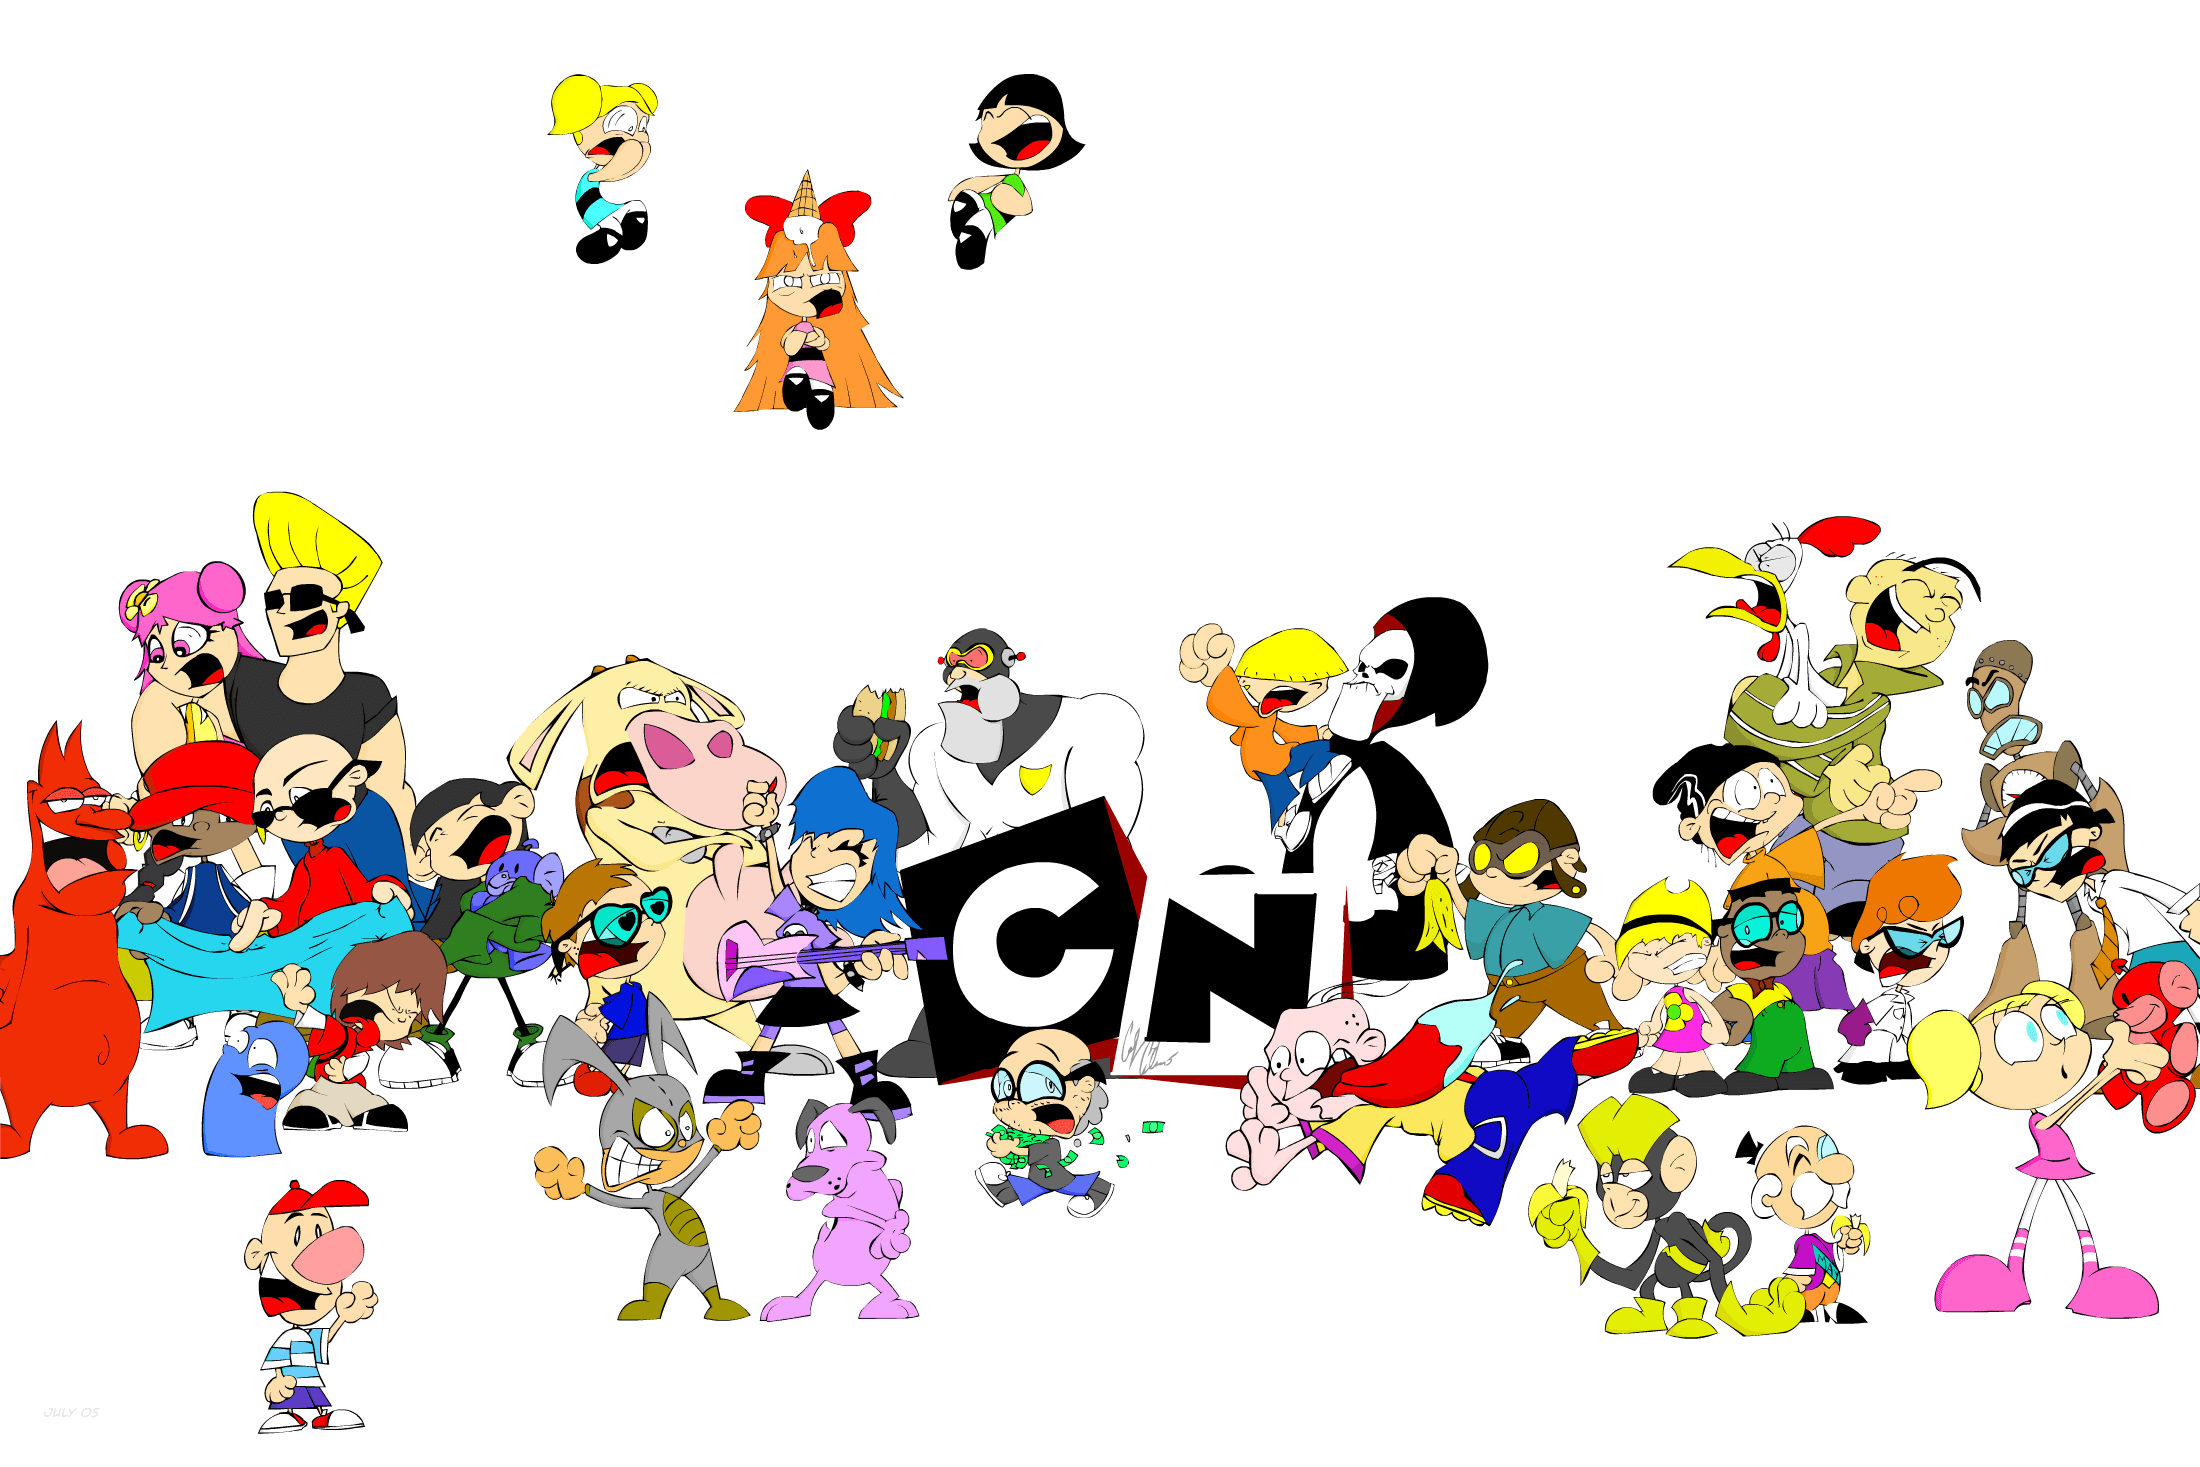 Cartoon Network Wallpaper HD